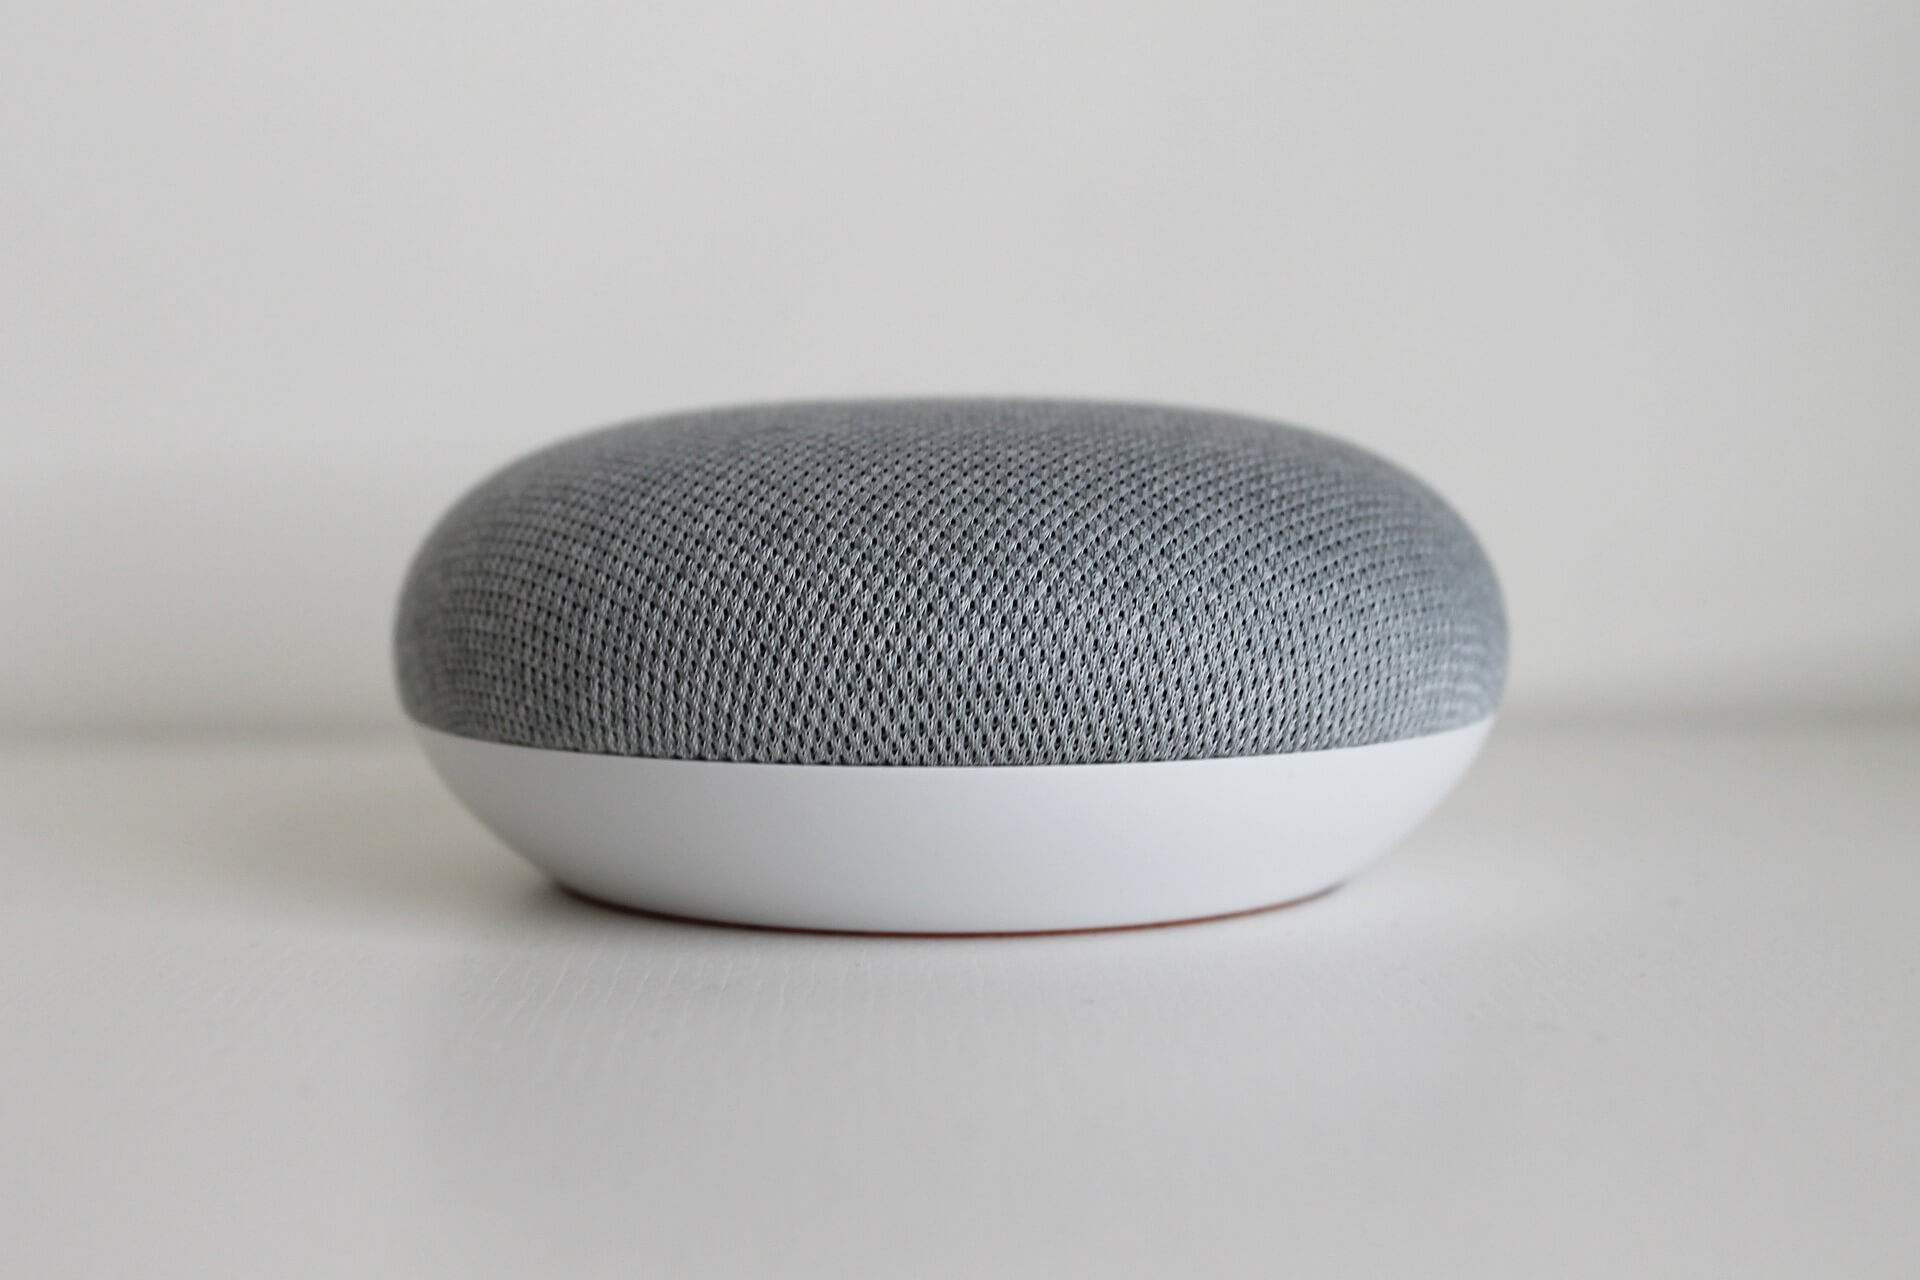 Google Home Mini: The Future of Smart Living is Here